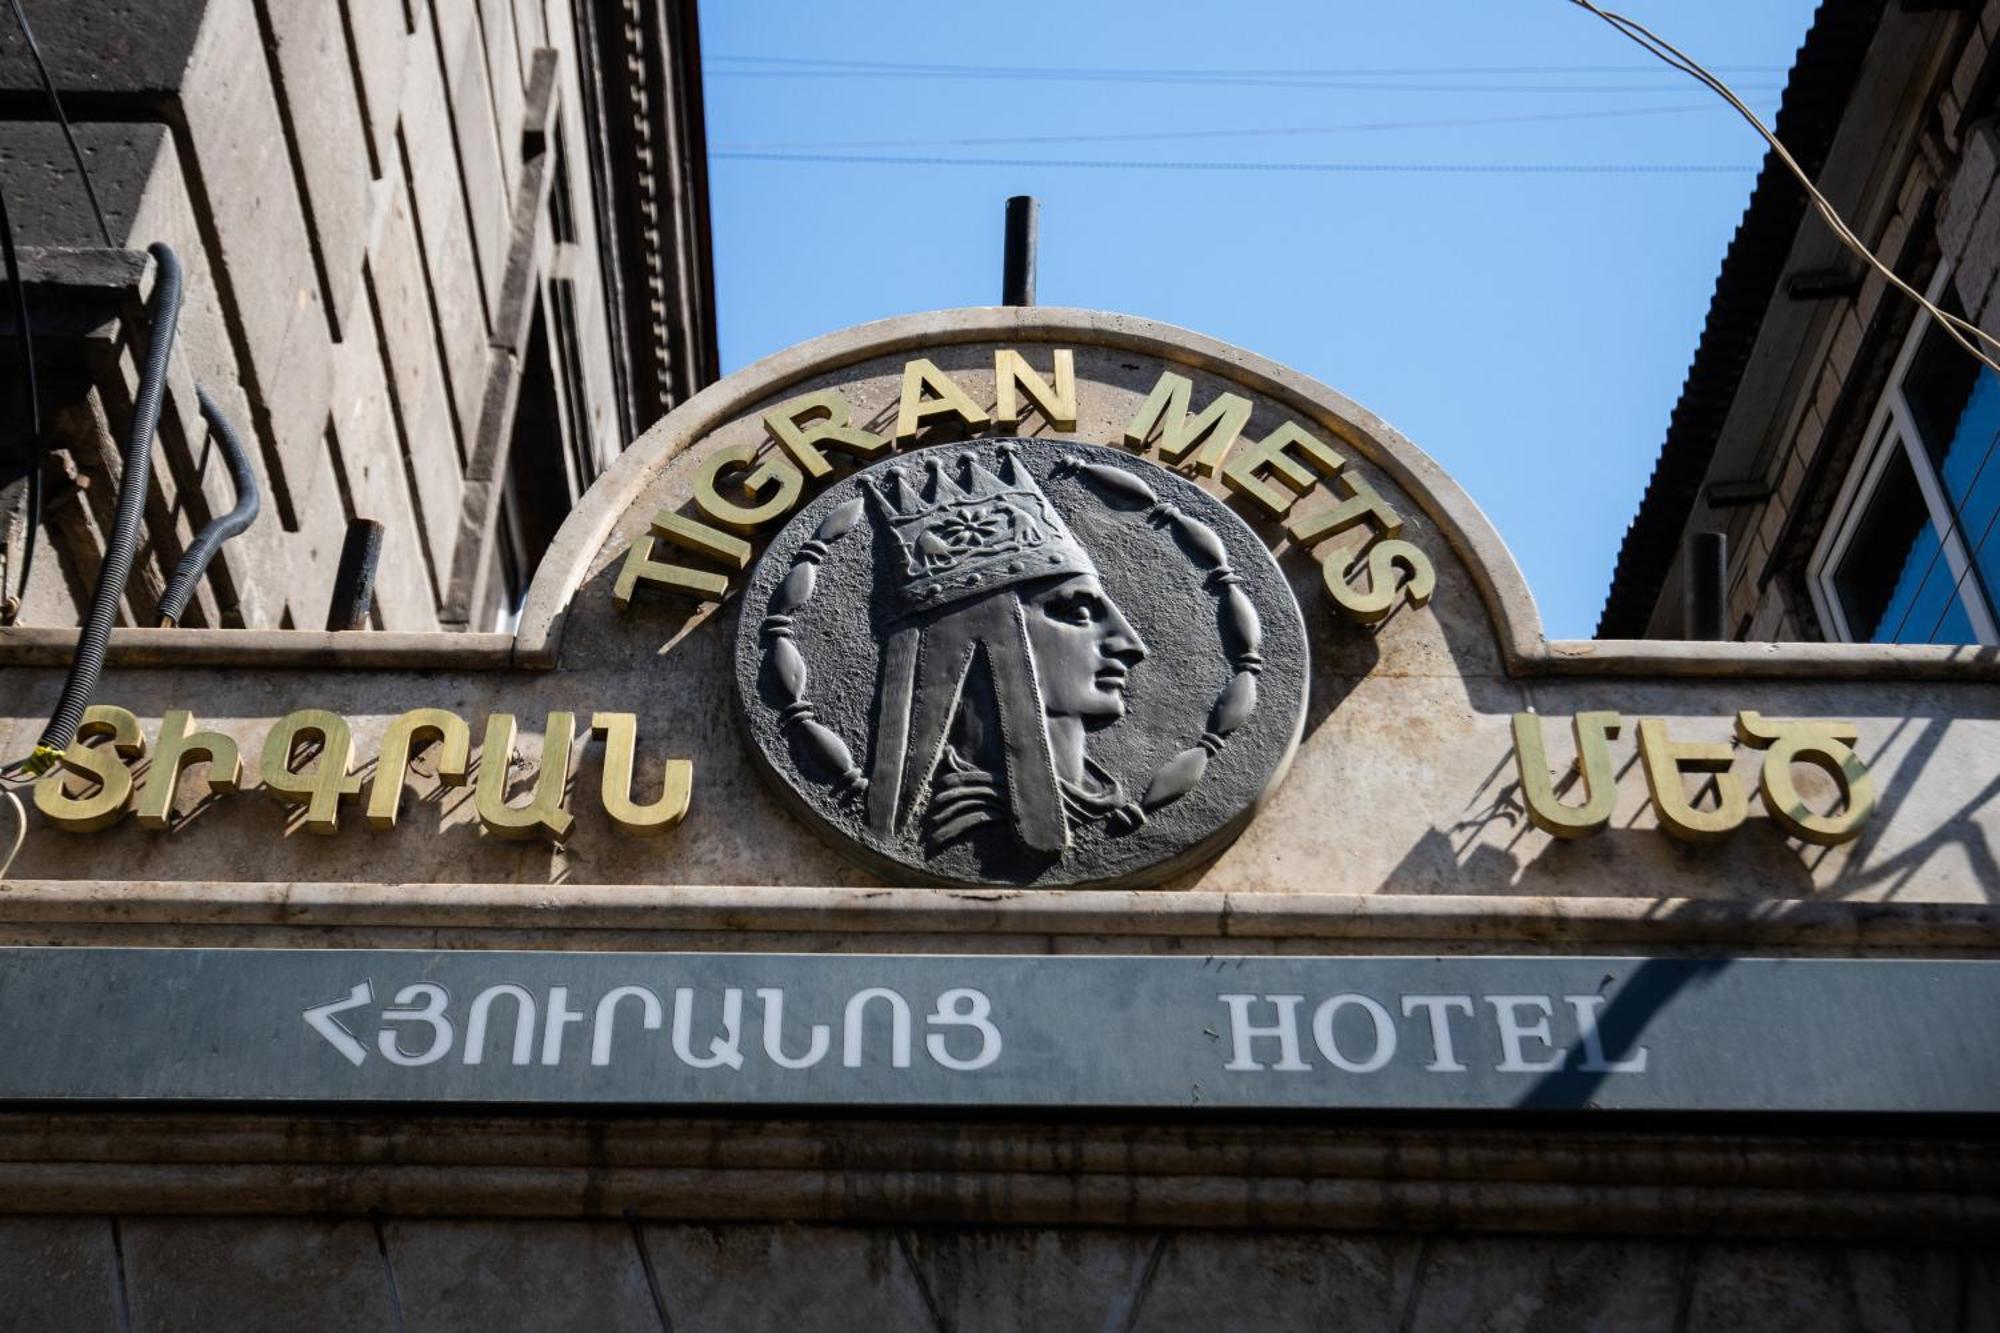 Hotel Tigran Mets Erévan Extérieur photo